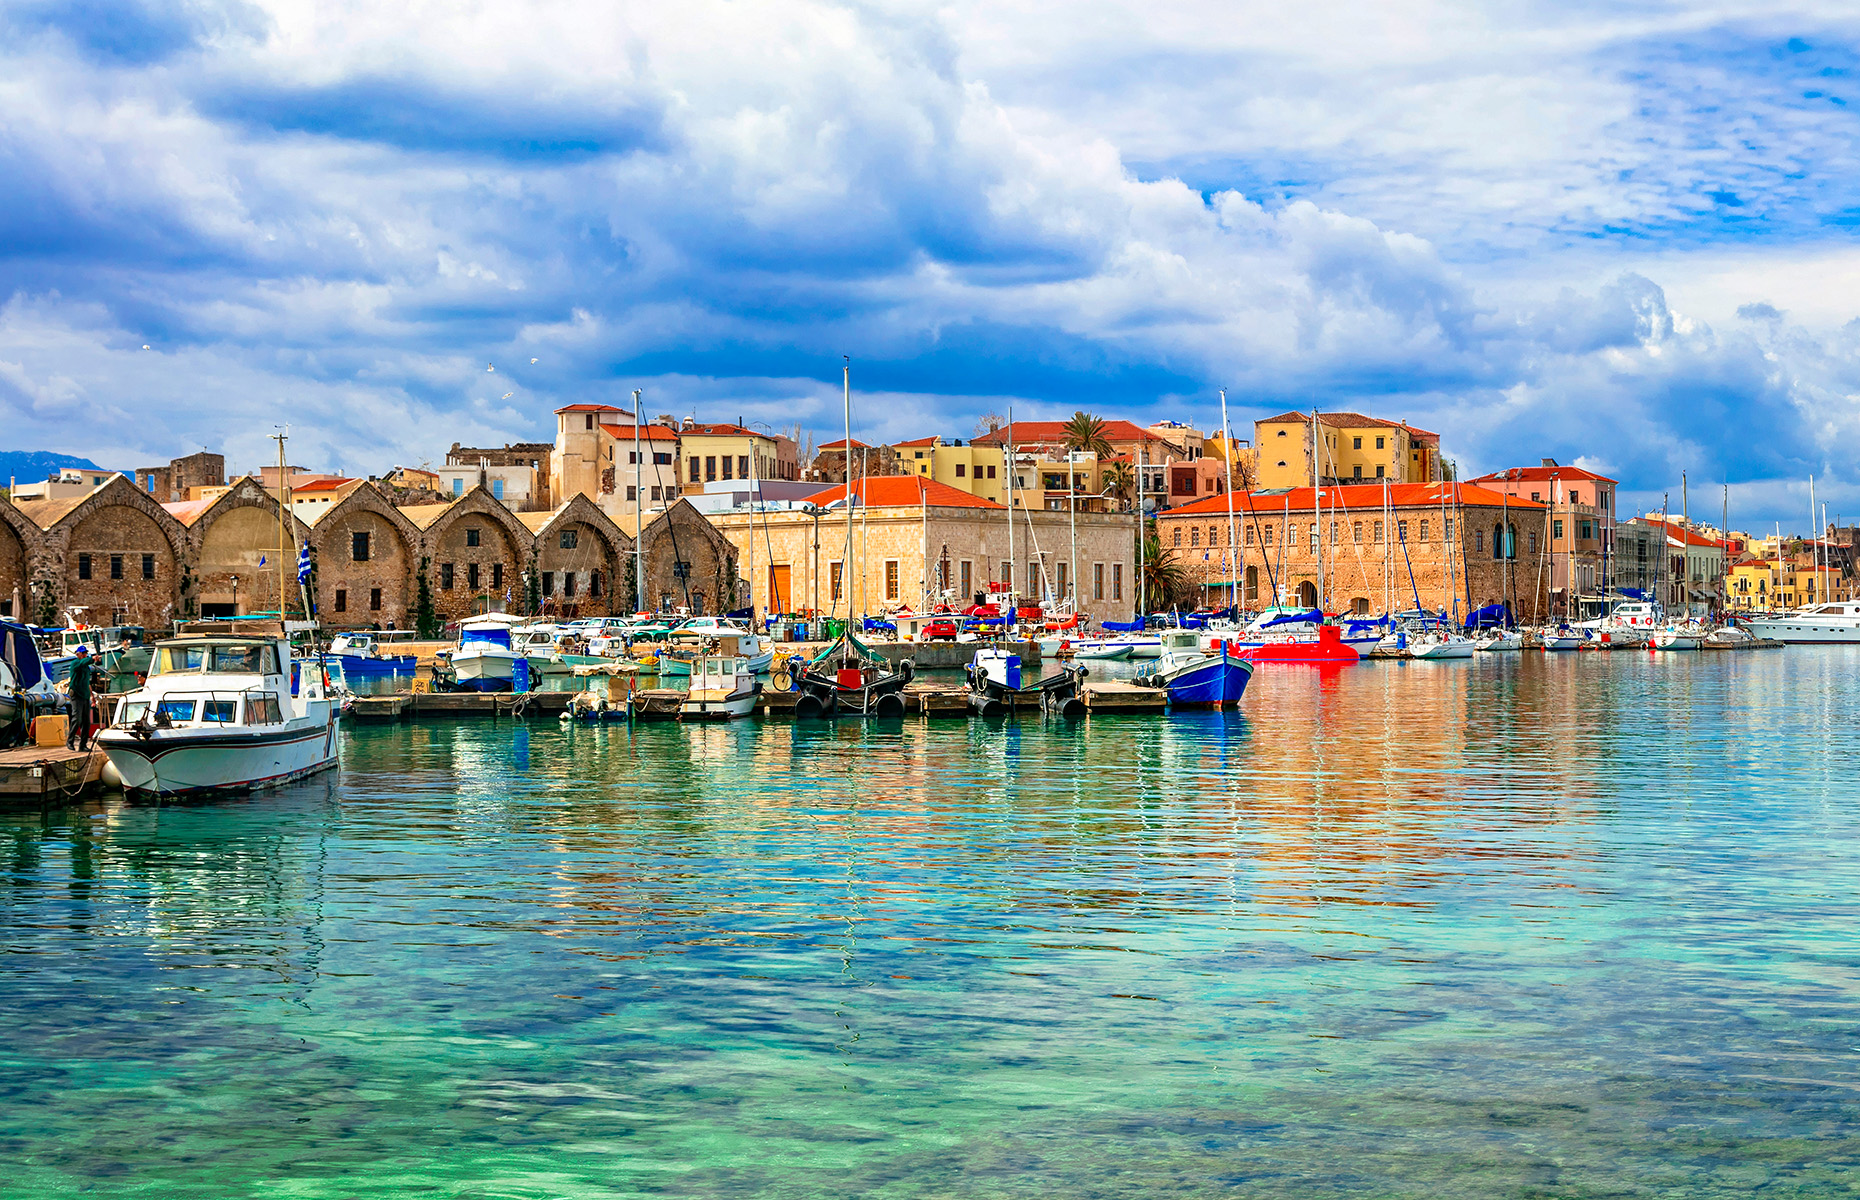 Chania, Crete, Greece. (Image: leoks/Shutterstock)